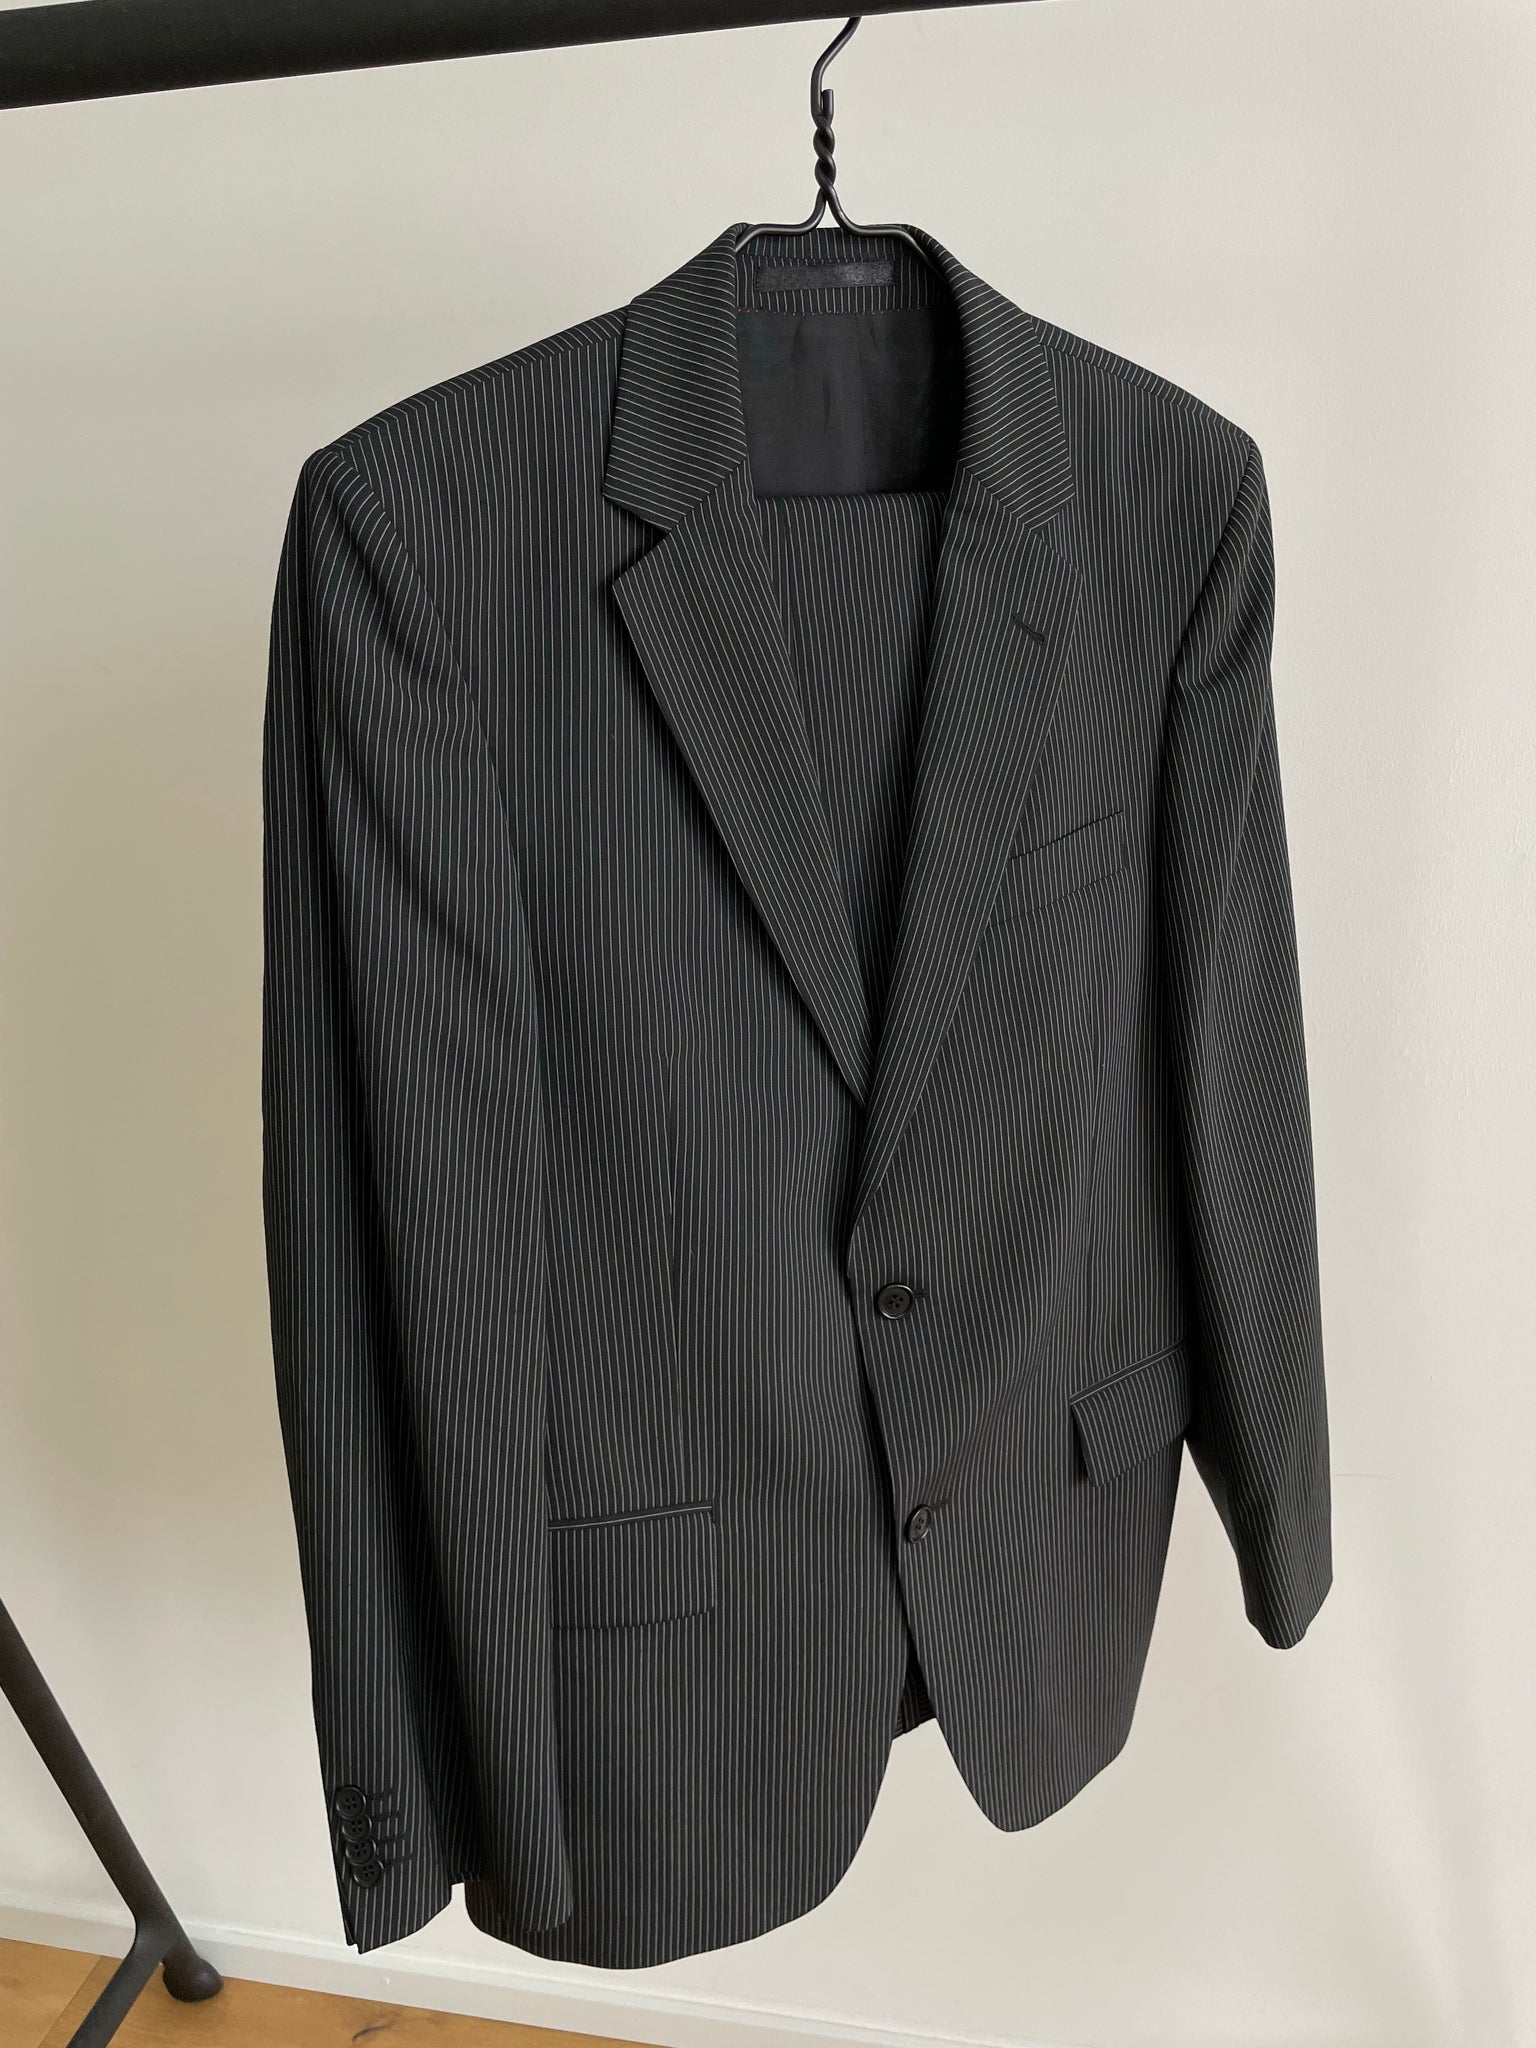 Black Pinstripe Suit 48